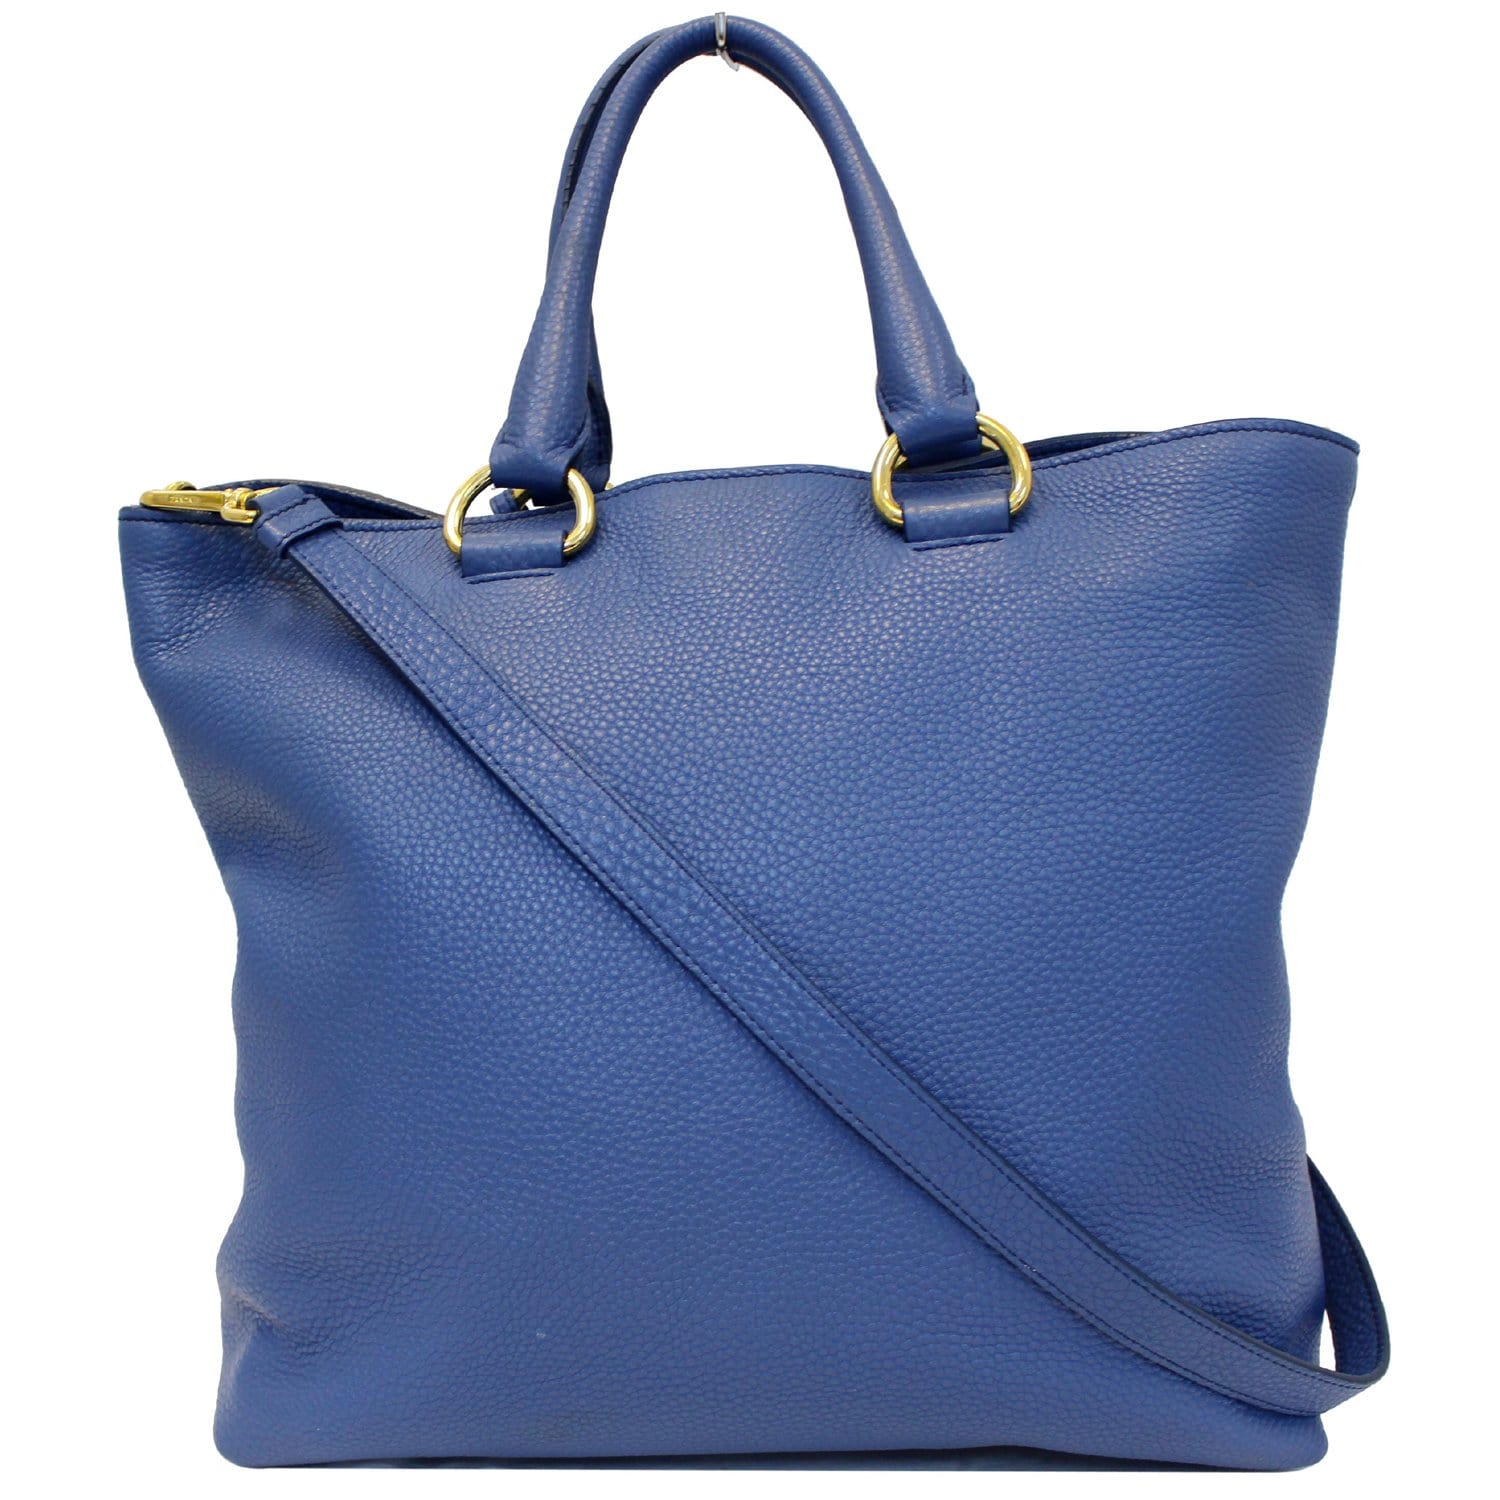 Prada Vitello Phenix Authentic Bag For Sale in Portlaoise, Laois from LivG